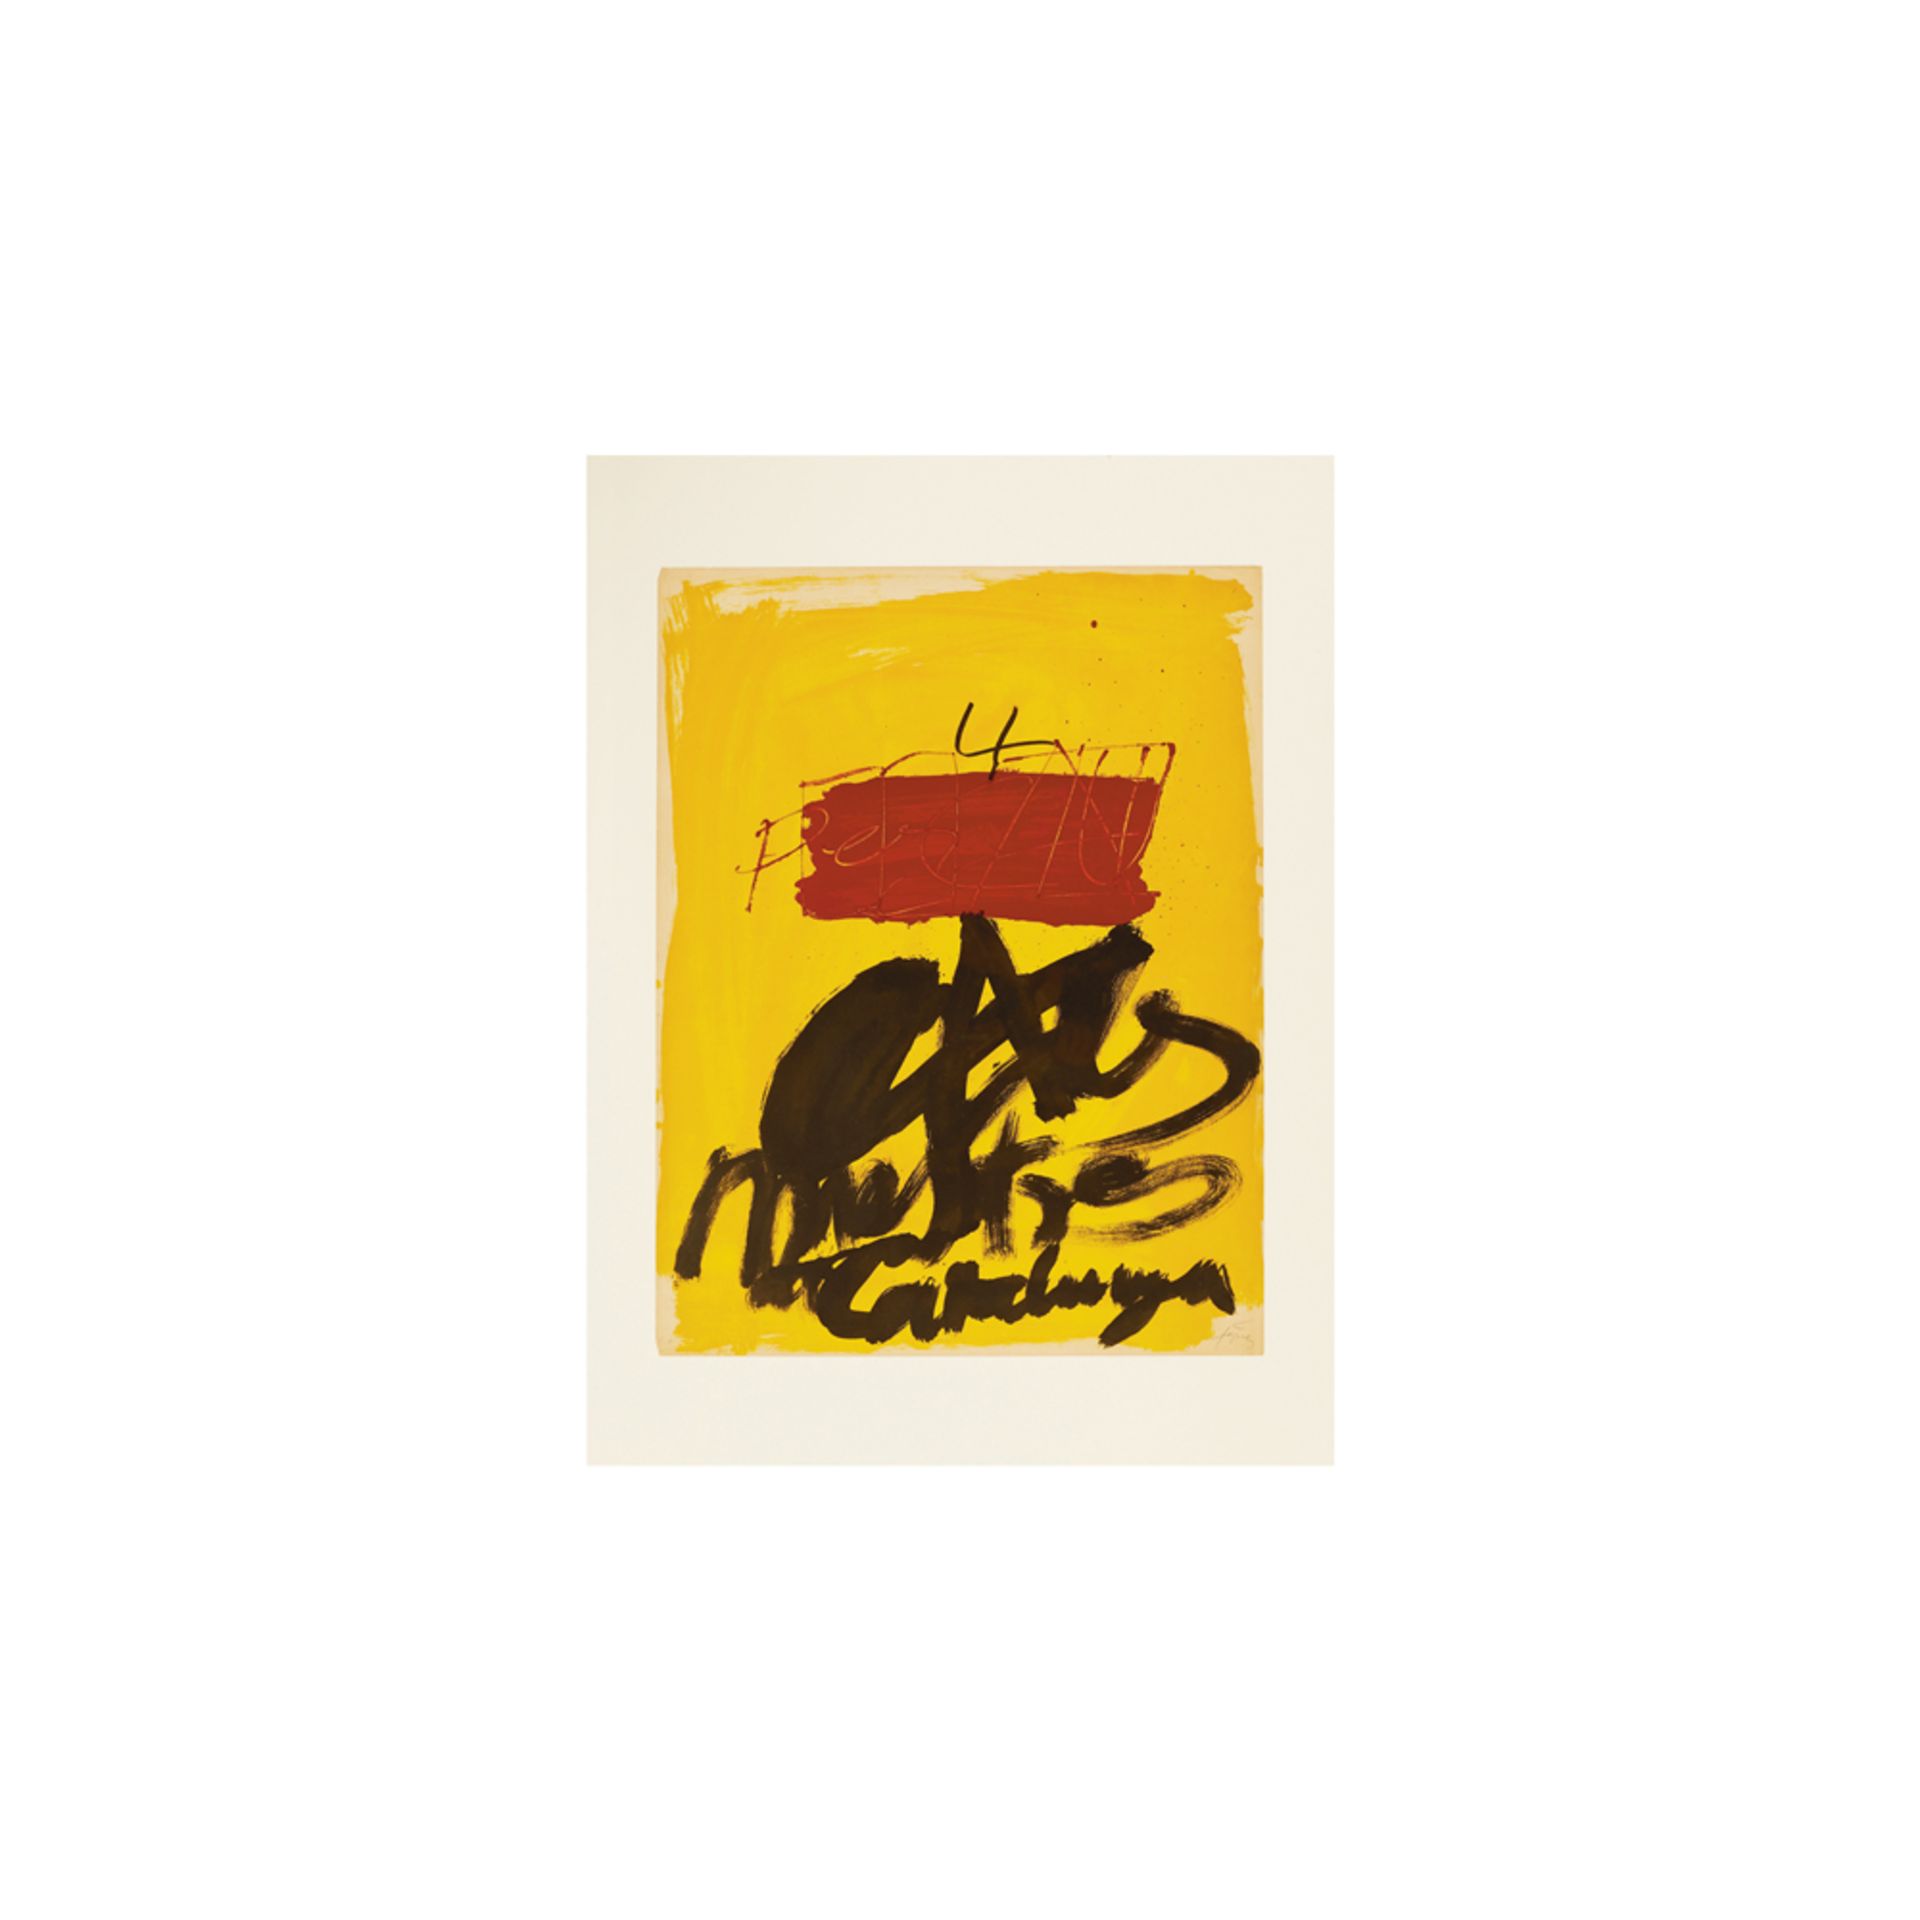 Antoni Tàpies (Barcelona, 1923-2012) Litografía.